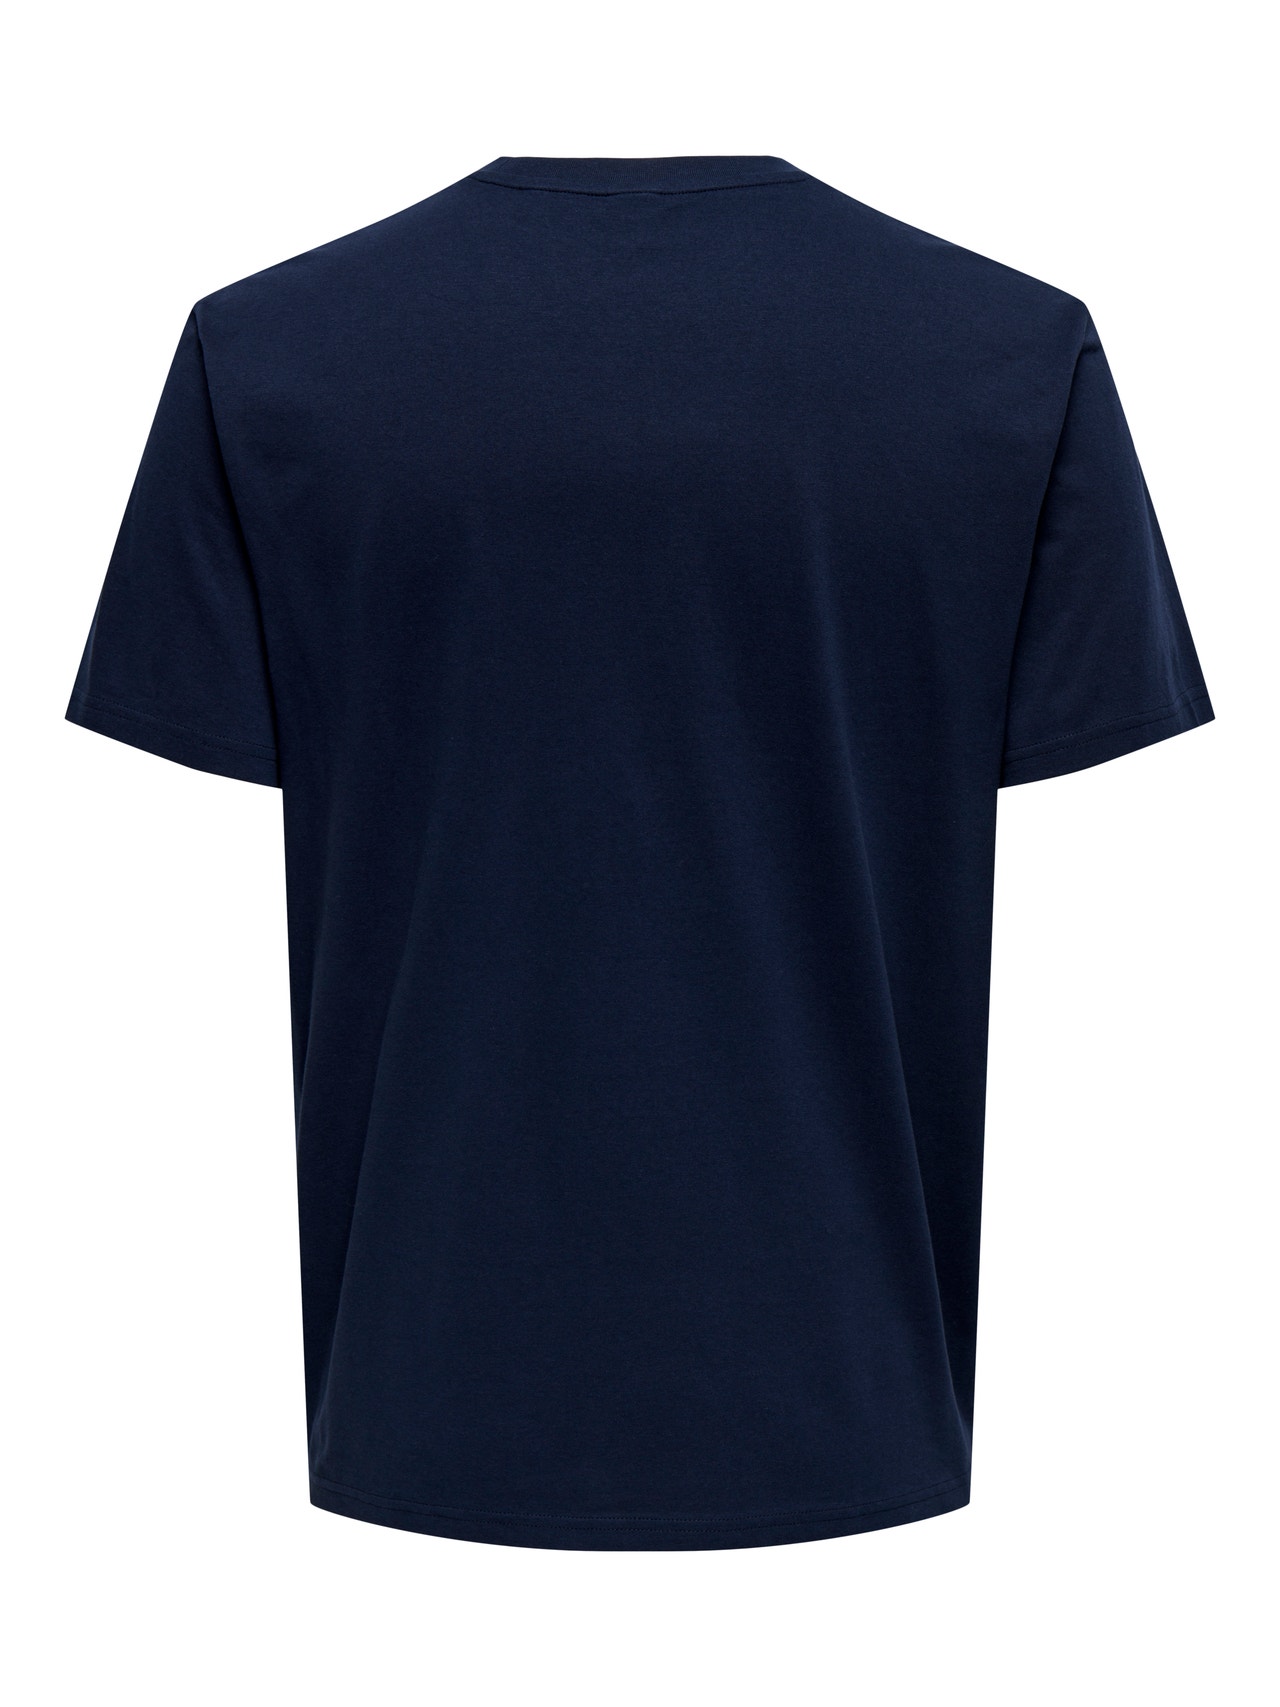 ONLY & SONS Camisetas Corte regular Cuello redondo -Navy Blazer - 22028593